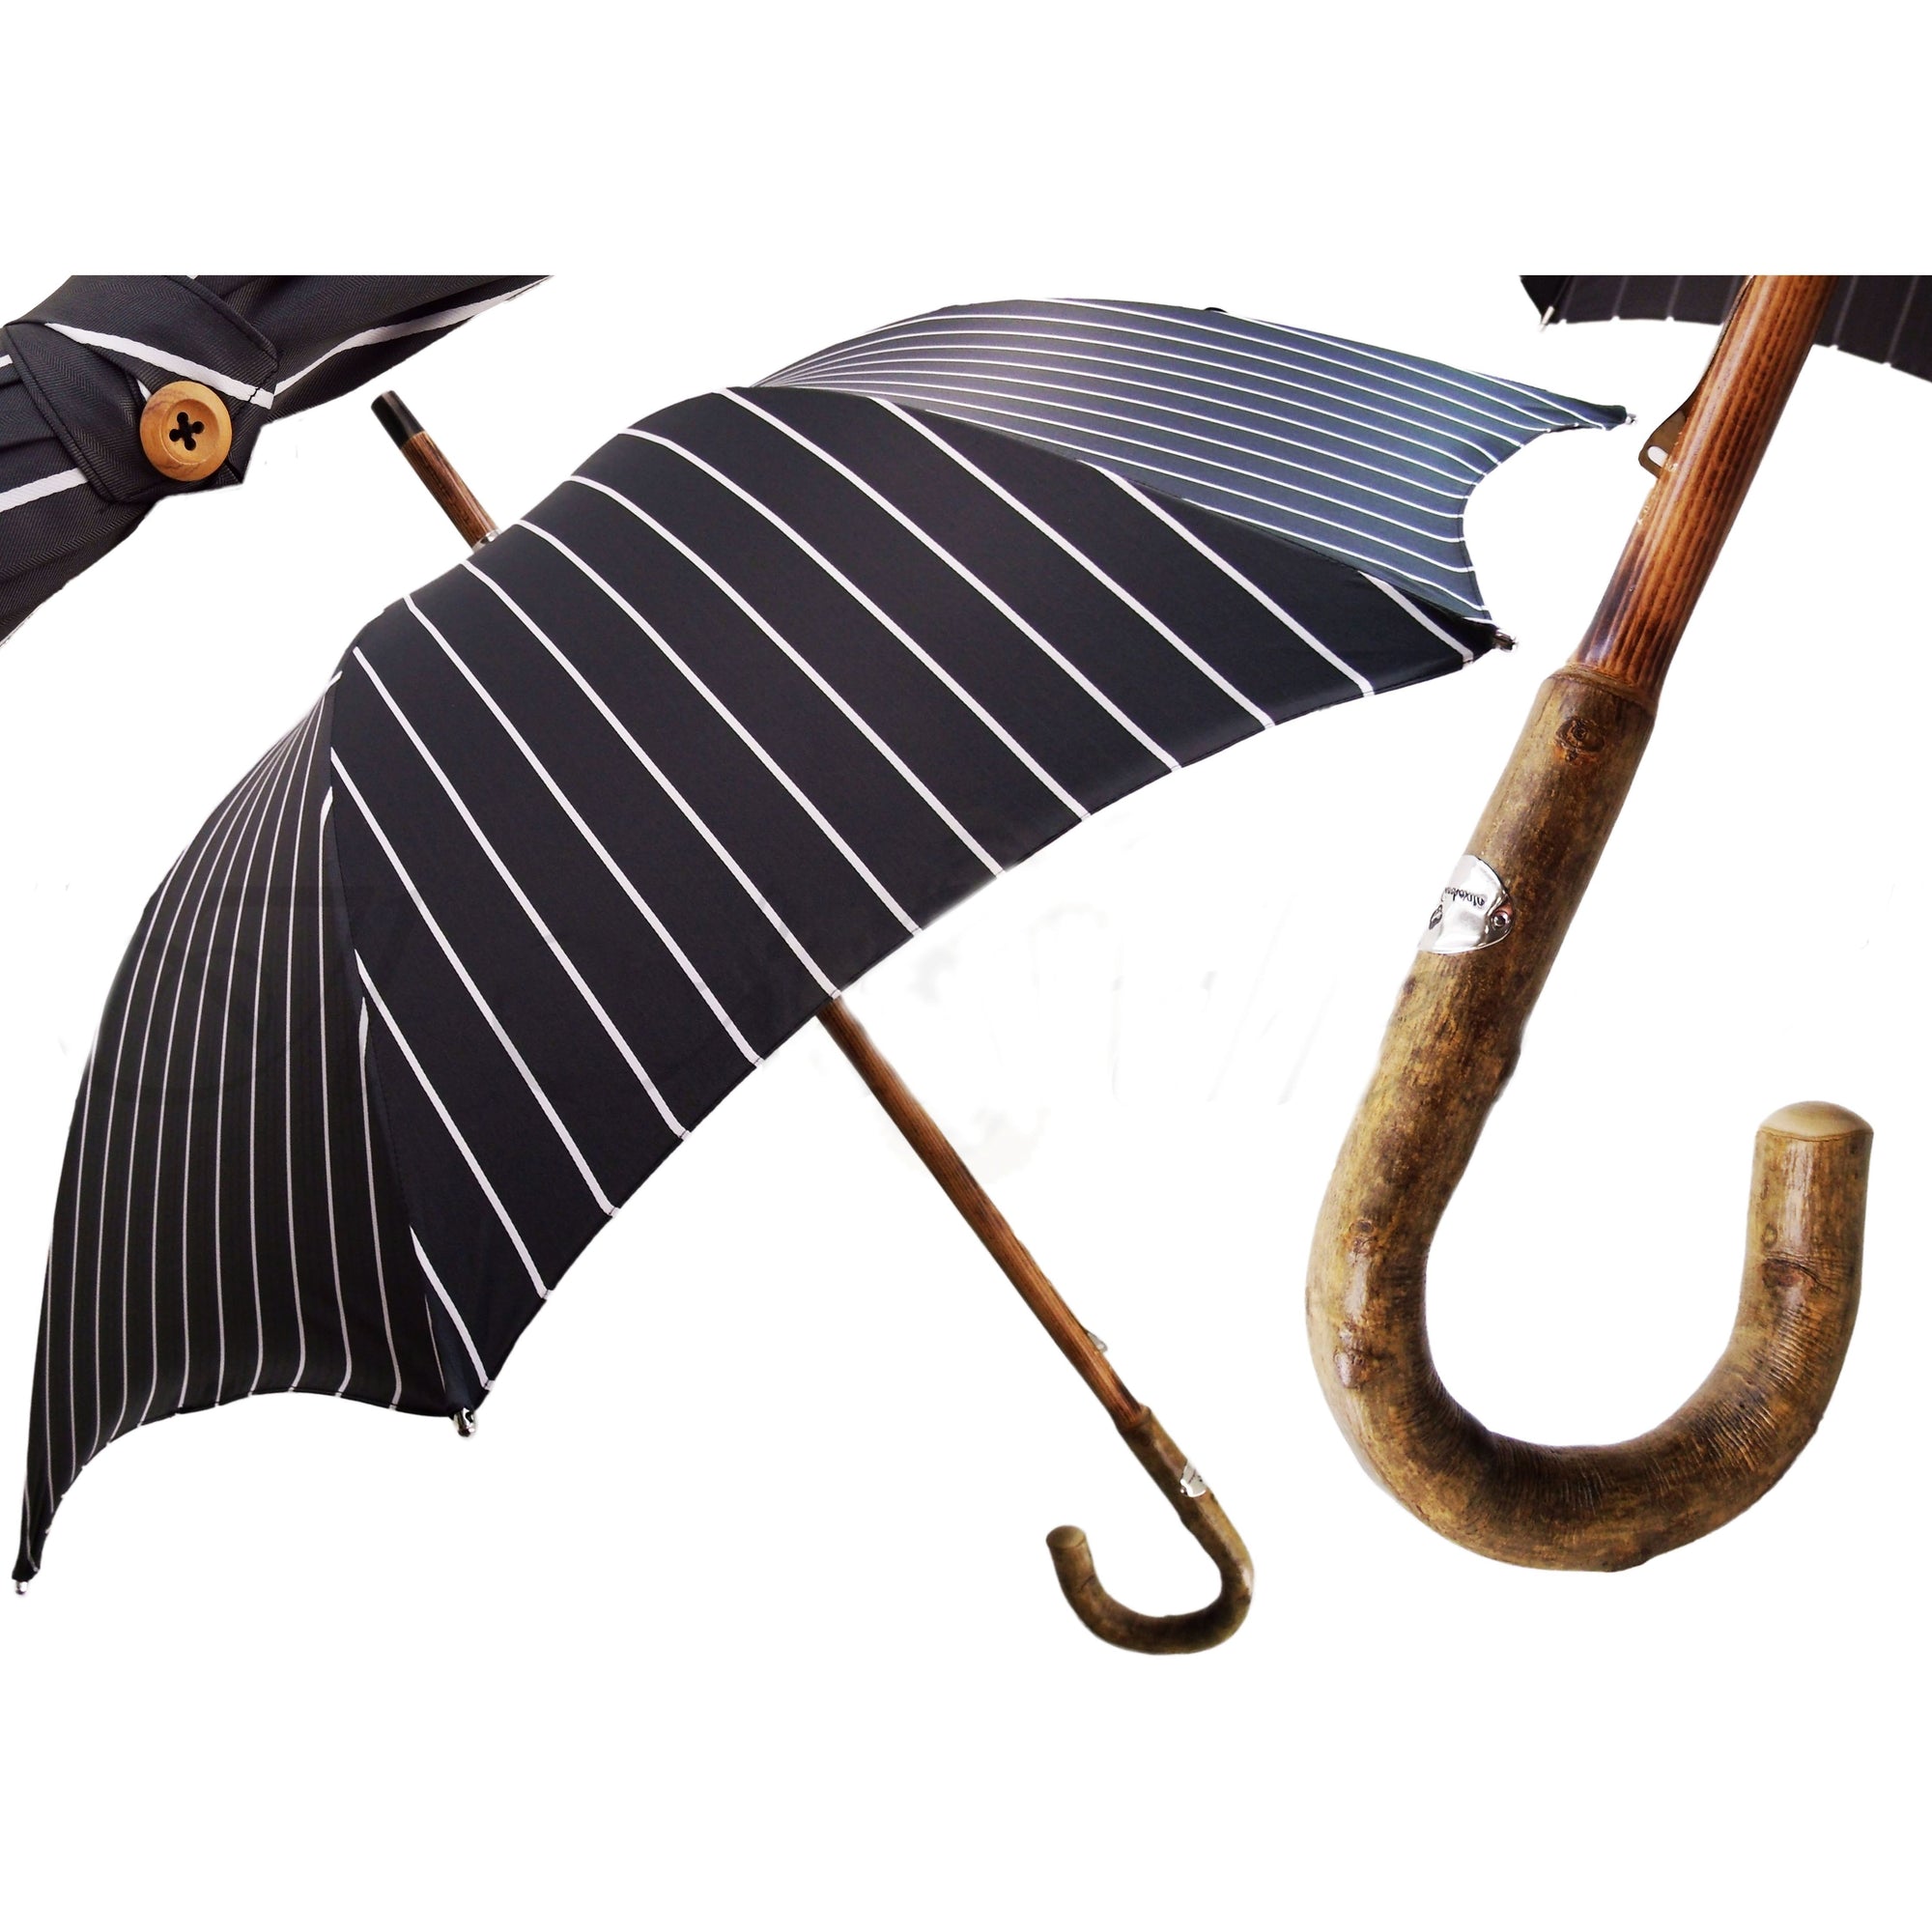 Black & White Striped Classic Umbrella with Ash Wood Handle